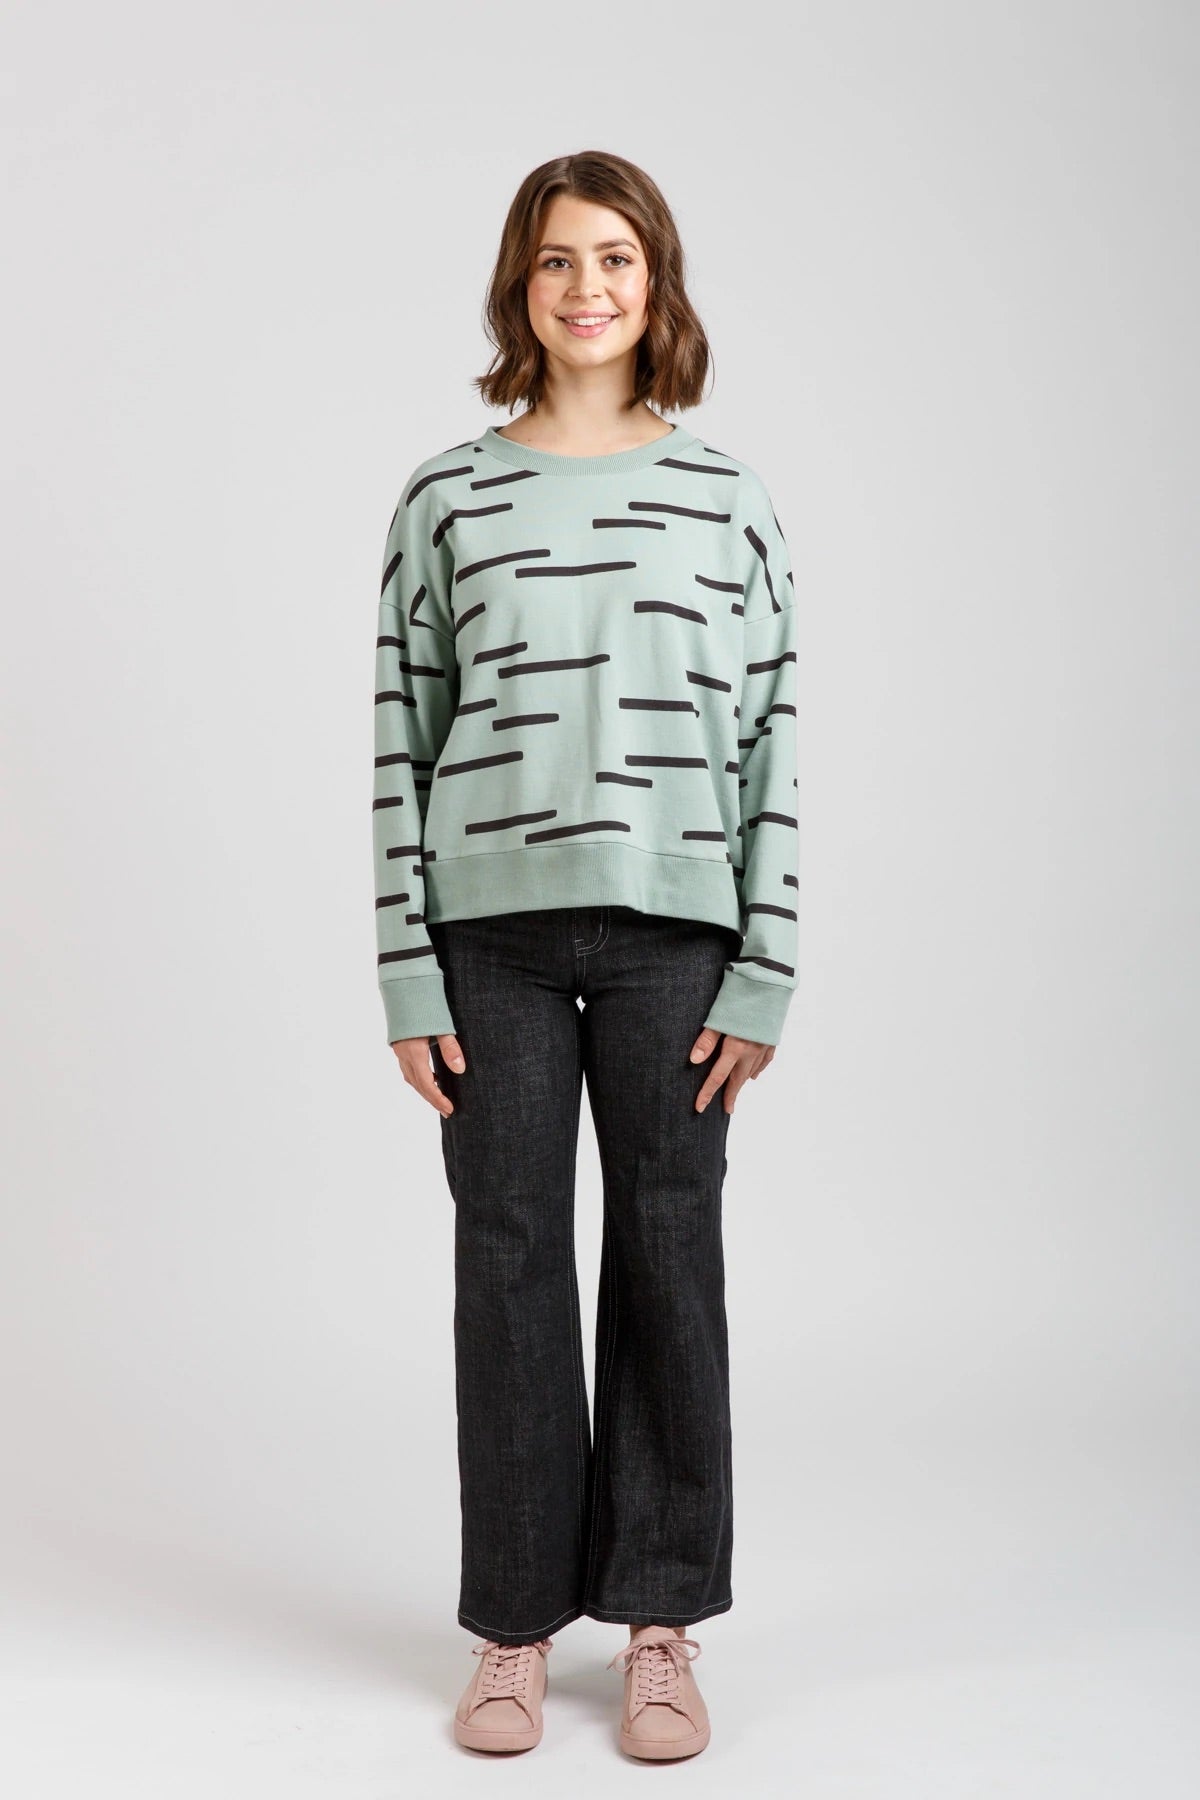 Megan Nielsen - Jarrah Sweater Sewing Pattern